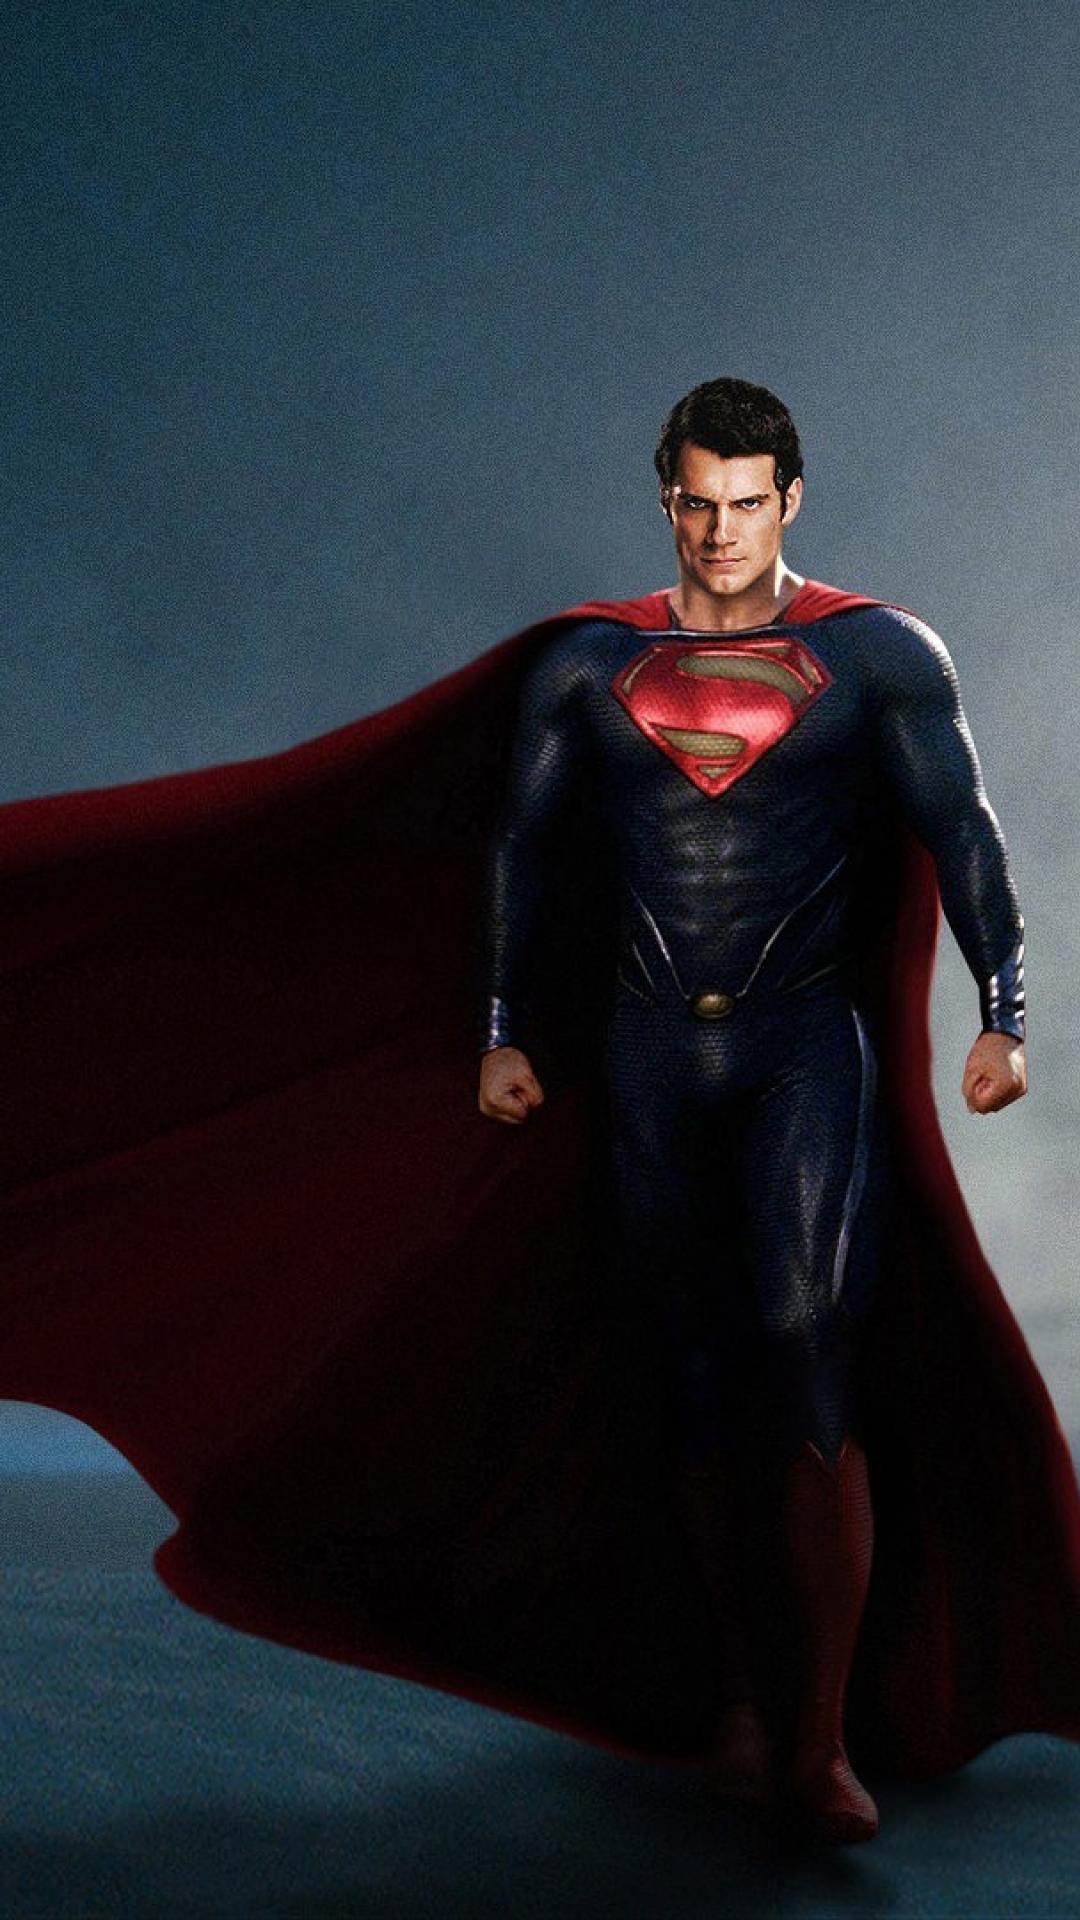 superman wallpaper hd for android,superman,superhero,fictional character,batman,justice league